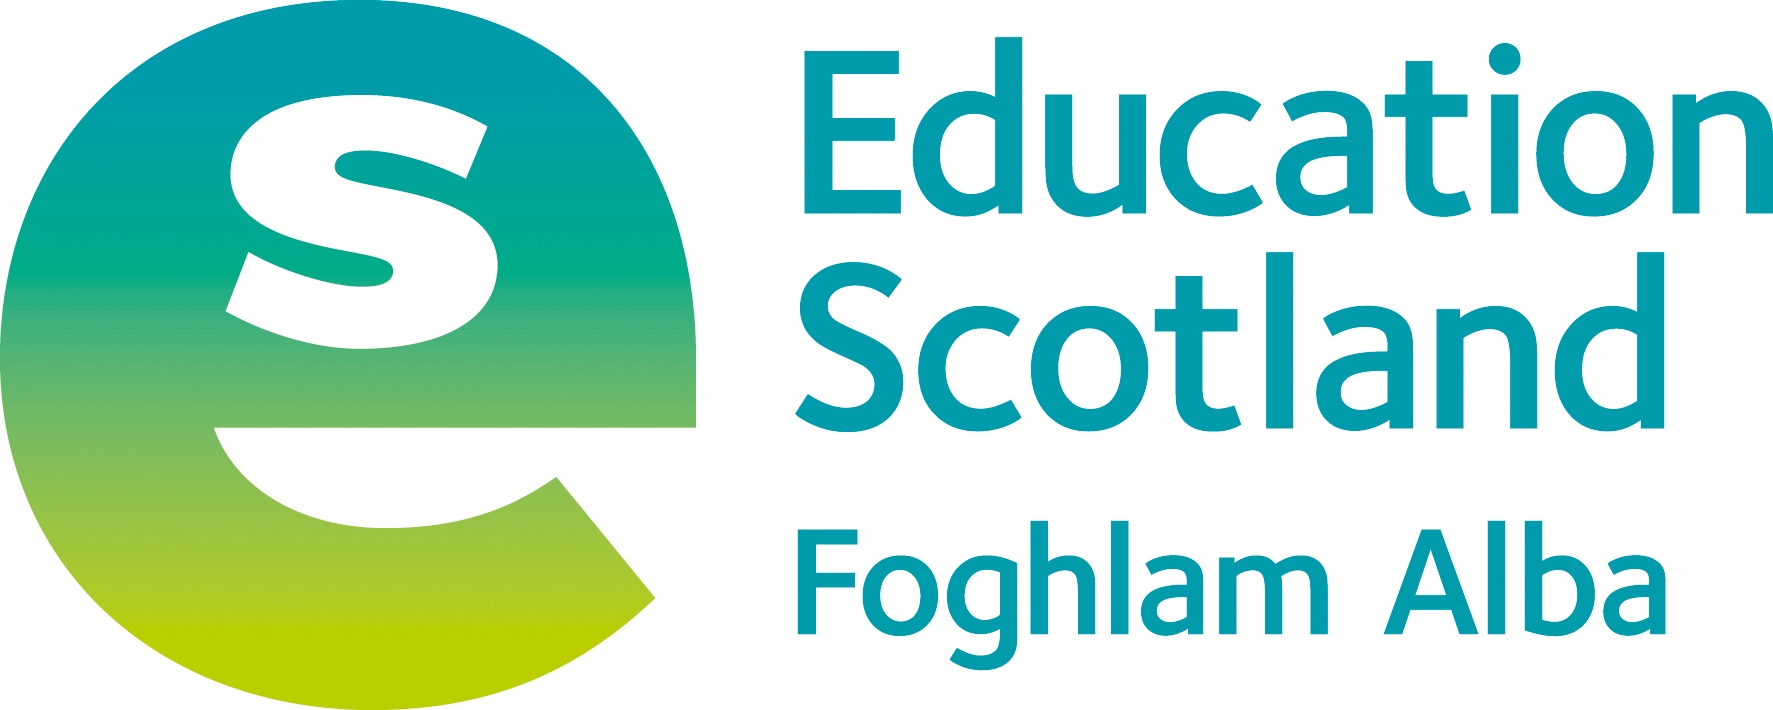 further education scotland